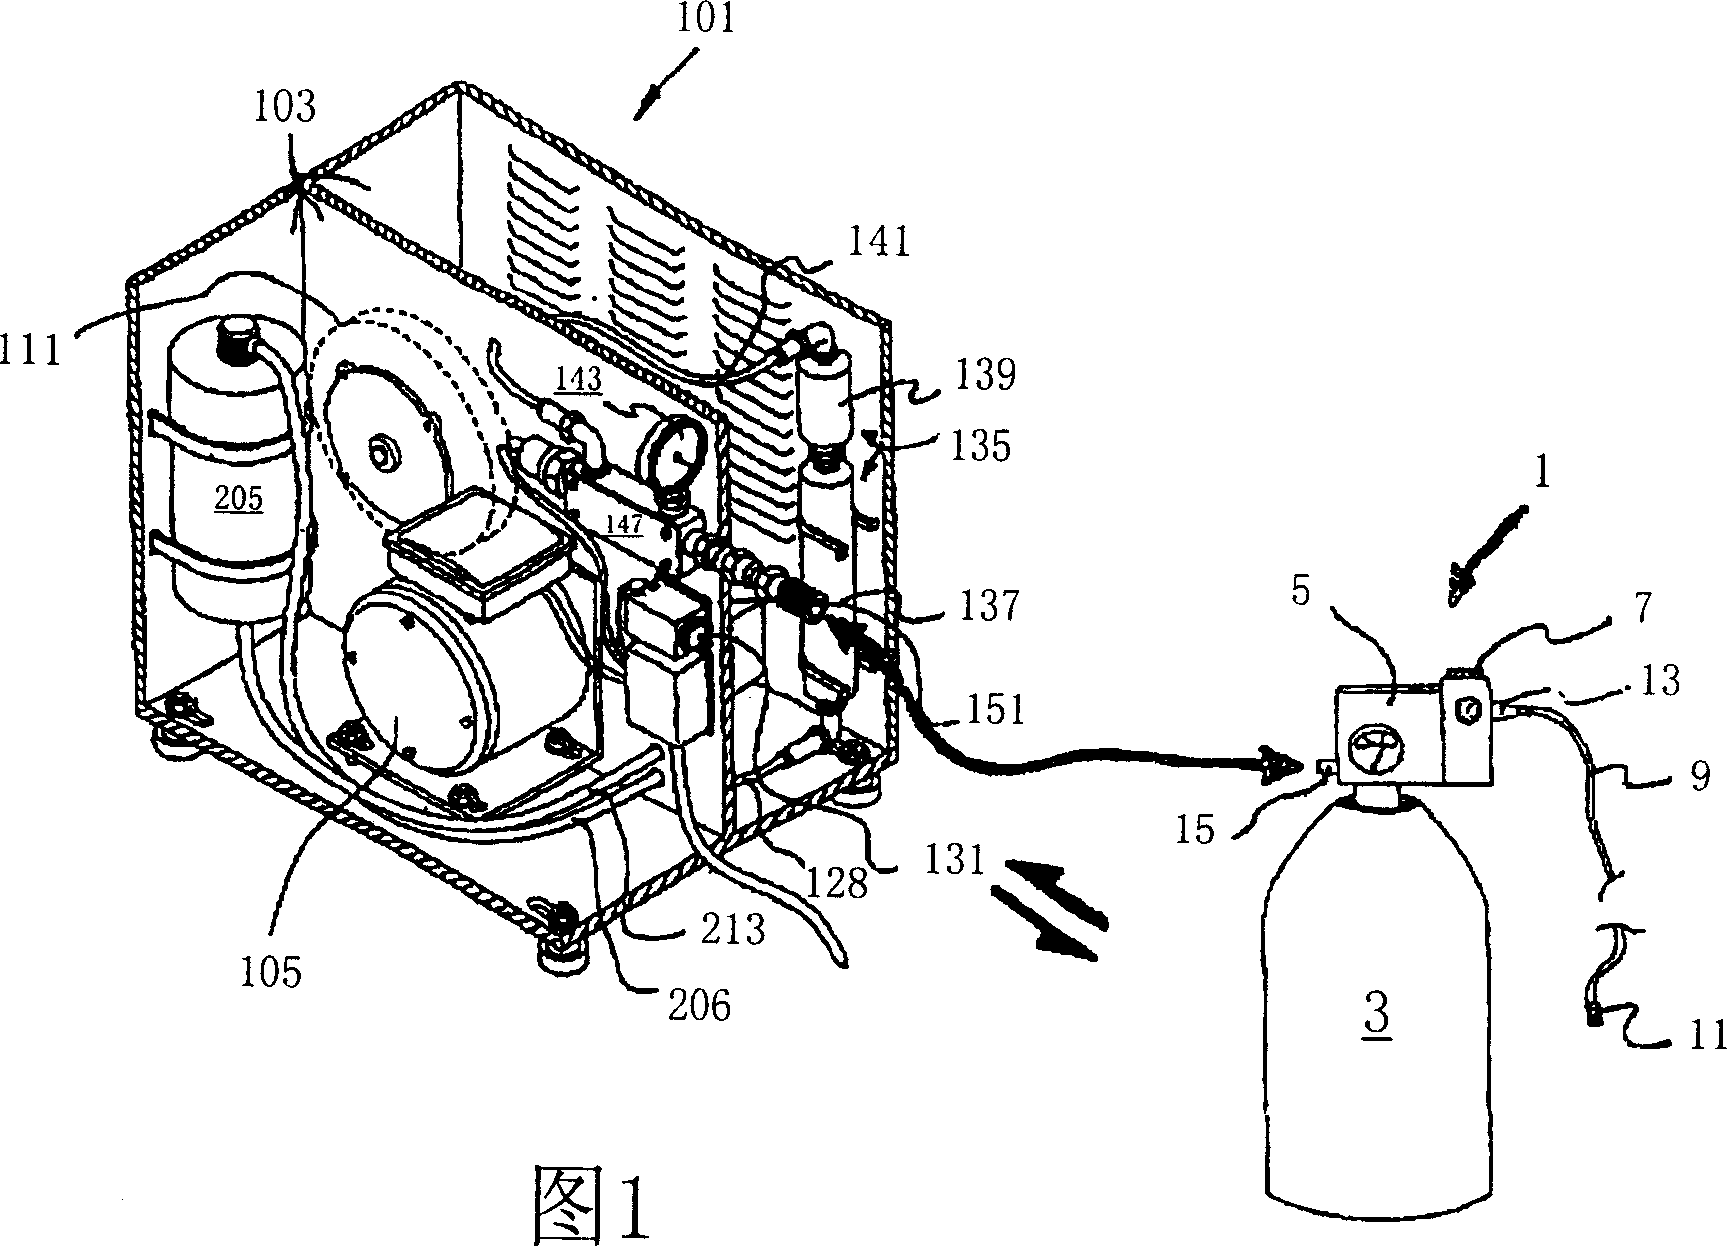 A system comprising a compressor and a portable pneumatic pressure reservoir